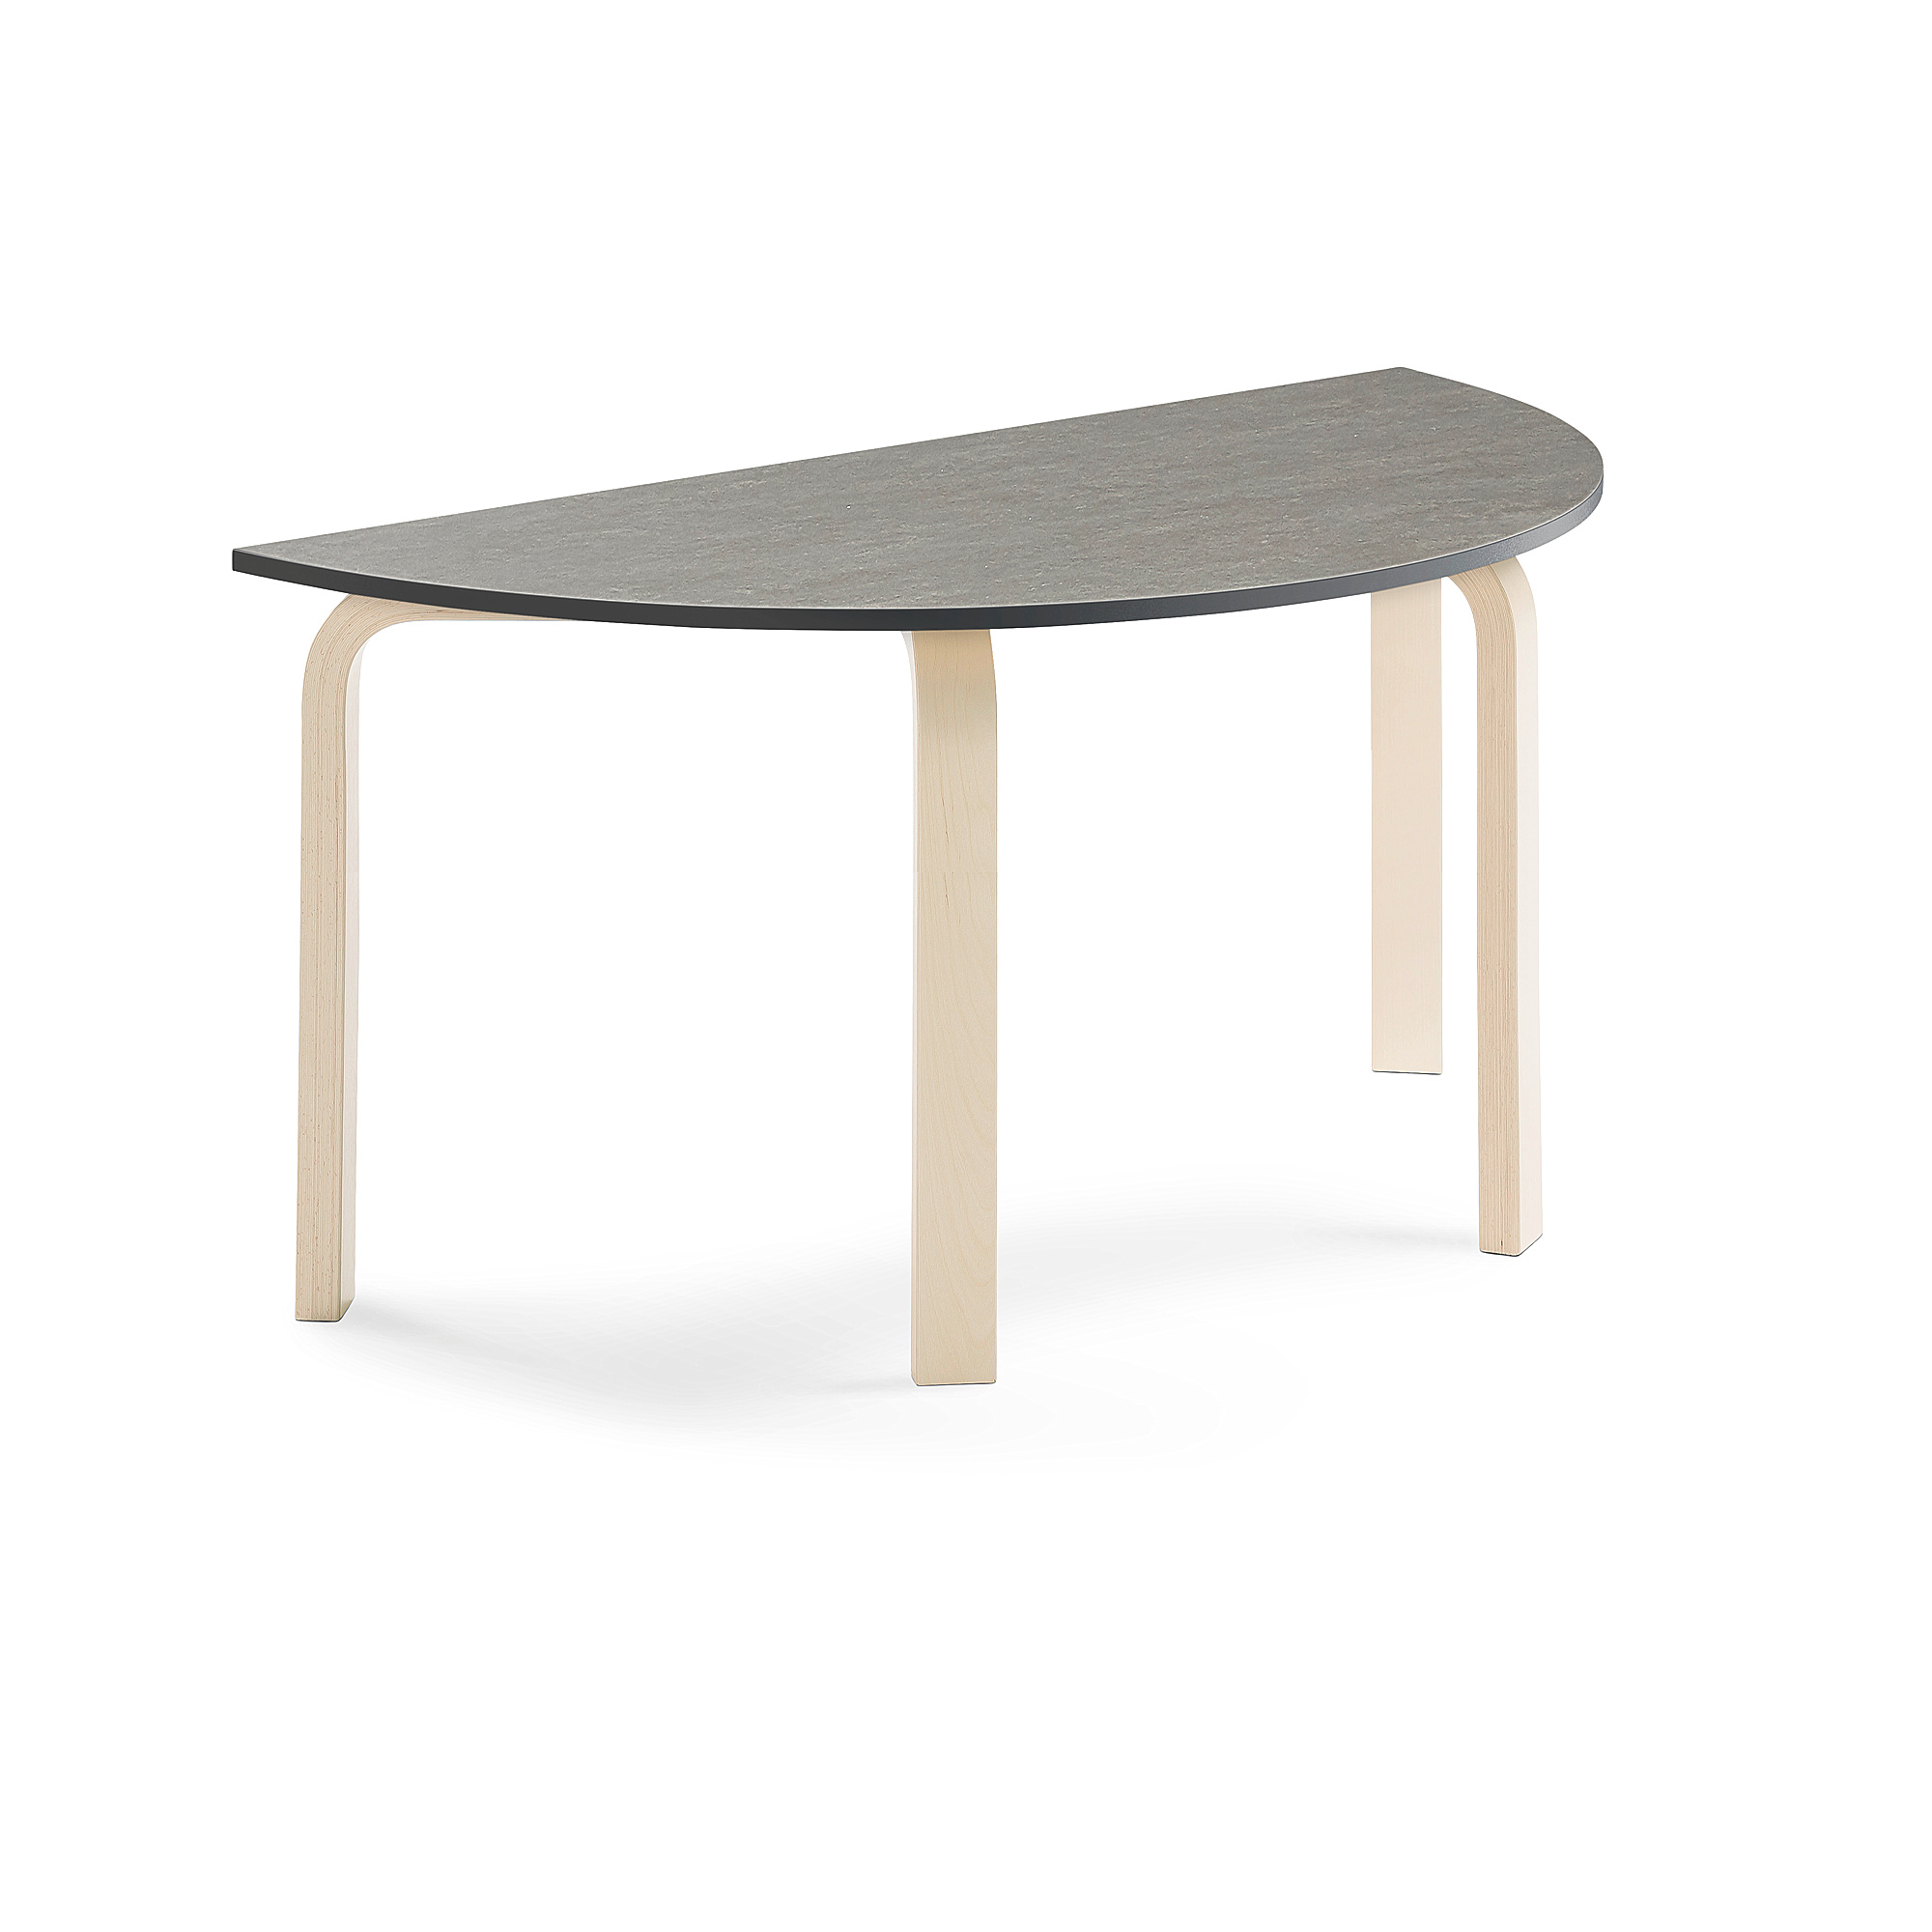 Stůl ELTON, půlkruh, 1200x600x590 mm, bříza, akustické linoleum, tmavě šedá